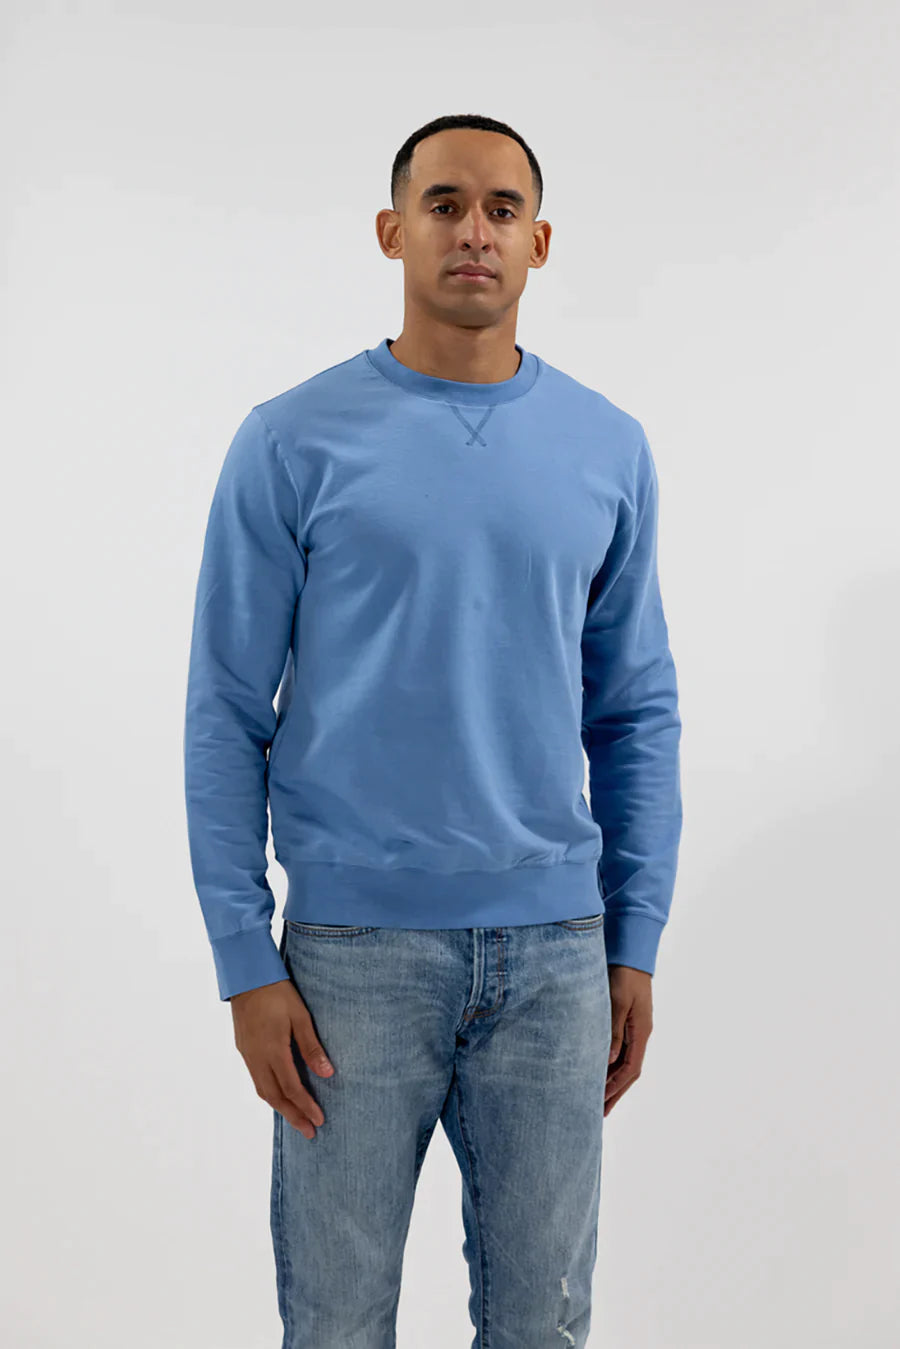 Easy Mondays Crew Neck Sweatshirt-Men&#39;s Sweatshirts-Sky Blue-L-Yaletown-Vancouver-Surrey-Canada